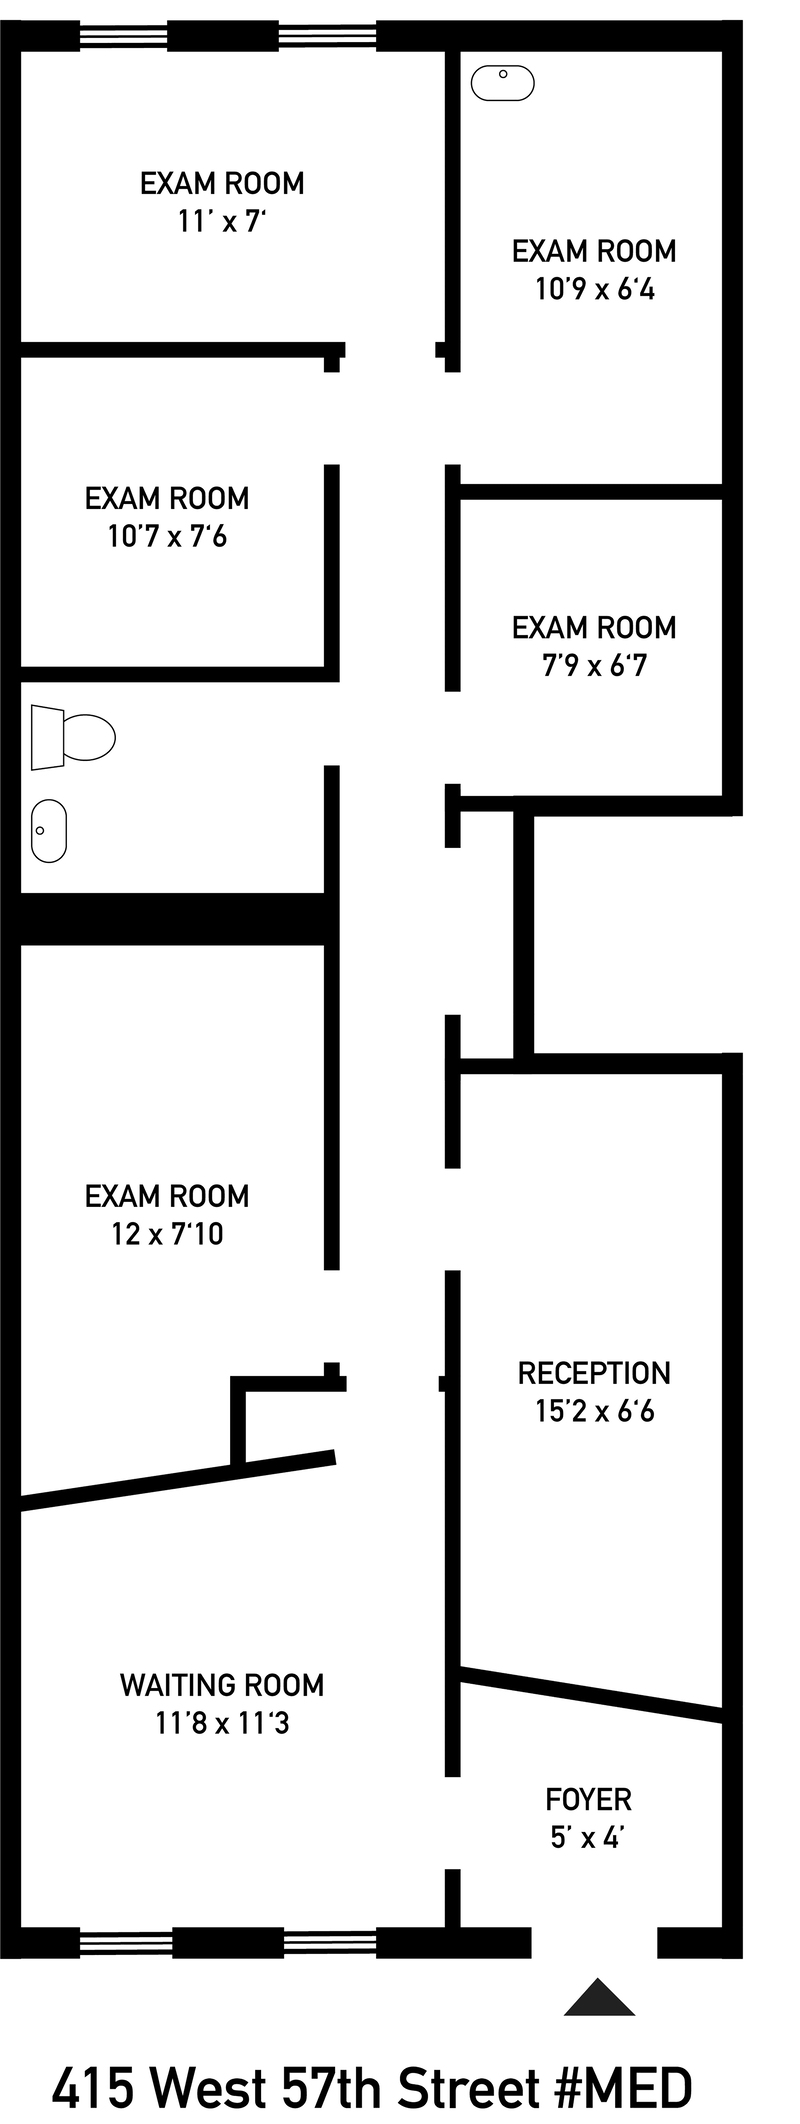 Floorplan for 415 West 57th Street, MEDICAL